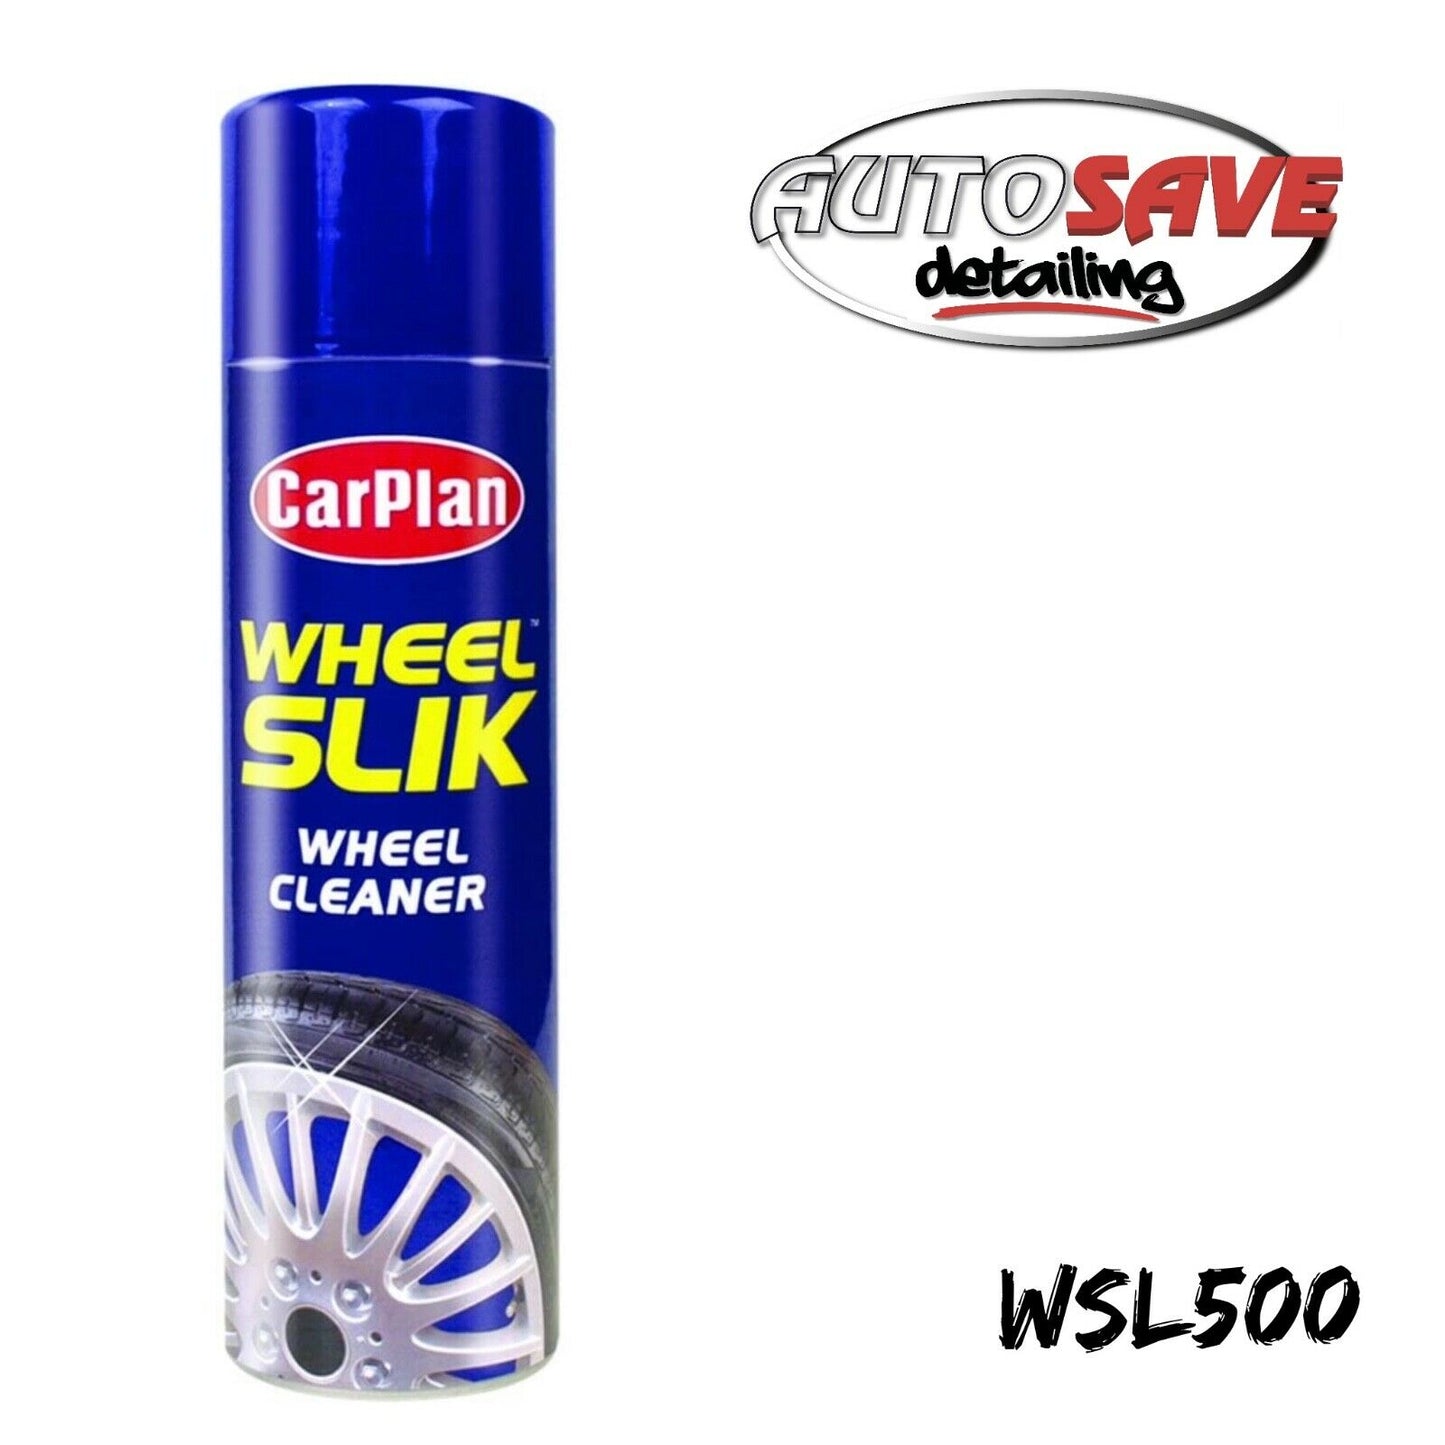 Carplan Wheel Slik Wheel Cleaner 500ml Auto Car Cleaning Shine Tyres